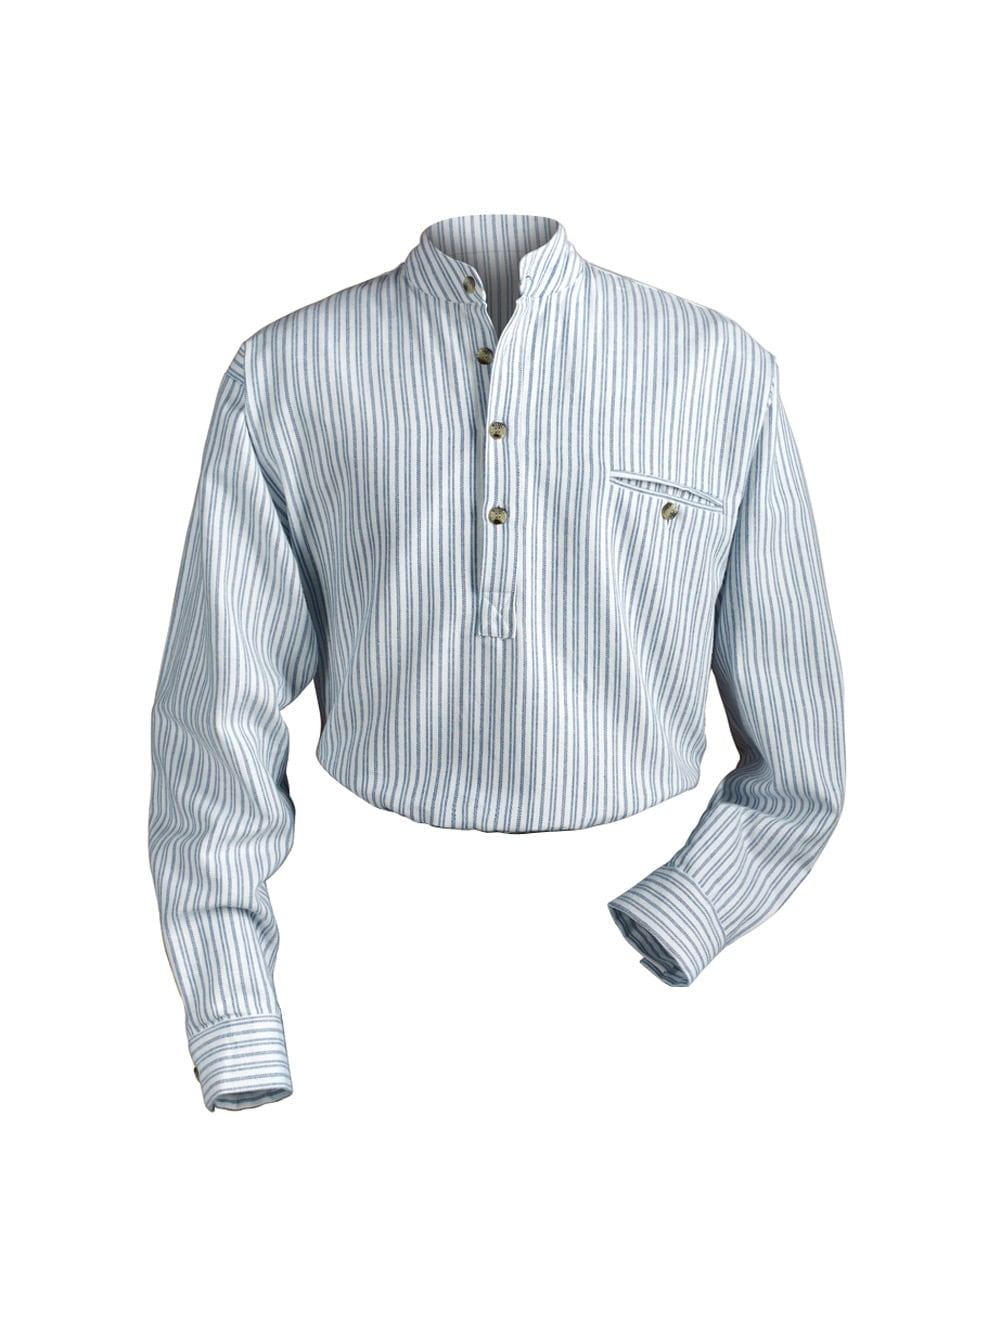 White Black ShirtVertical Stripes Cotton 100% Grandad CollarFREE POSTAGE! 